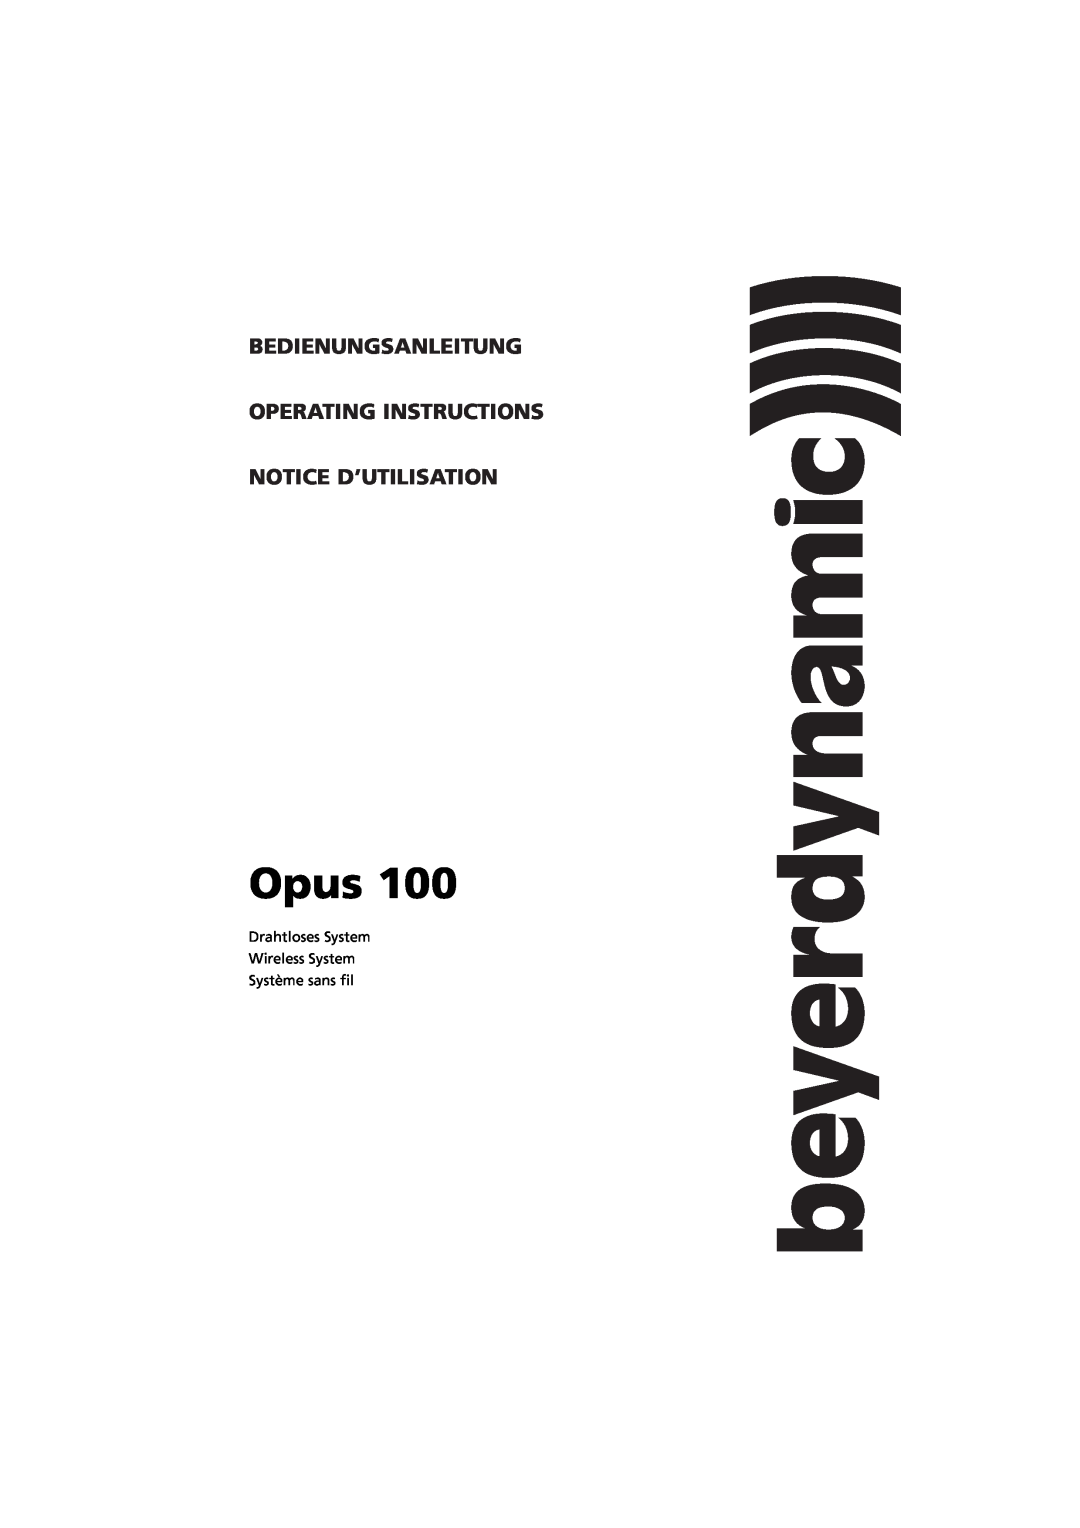 Beyerdynamic Opus 100 operating instructions Bedienungsanleitung Operating Instructions, Notice D’Utilisation 